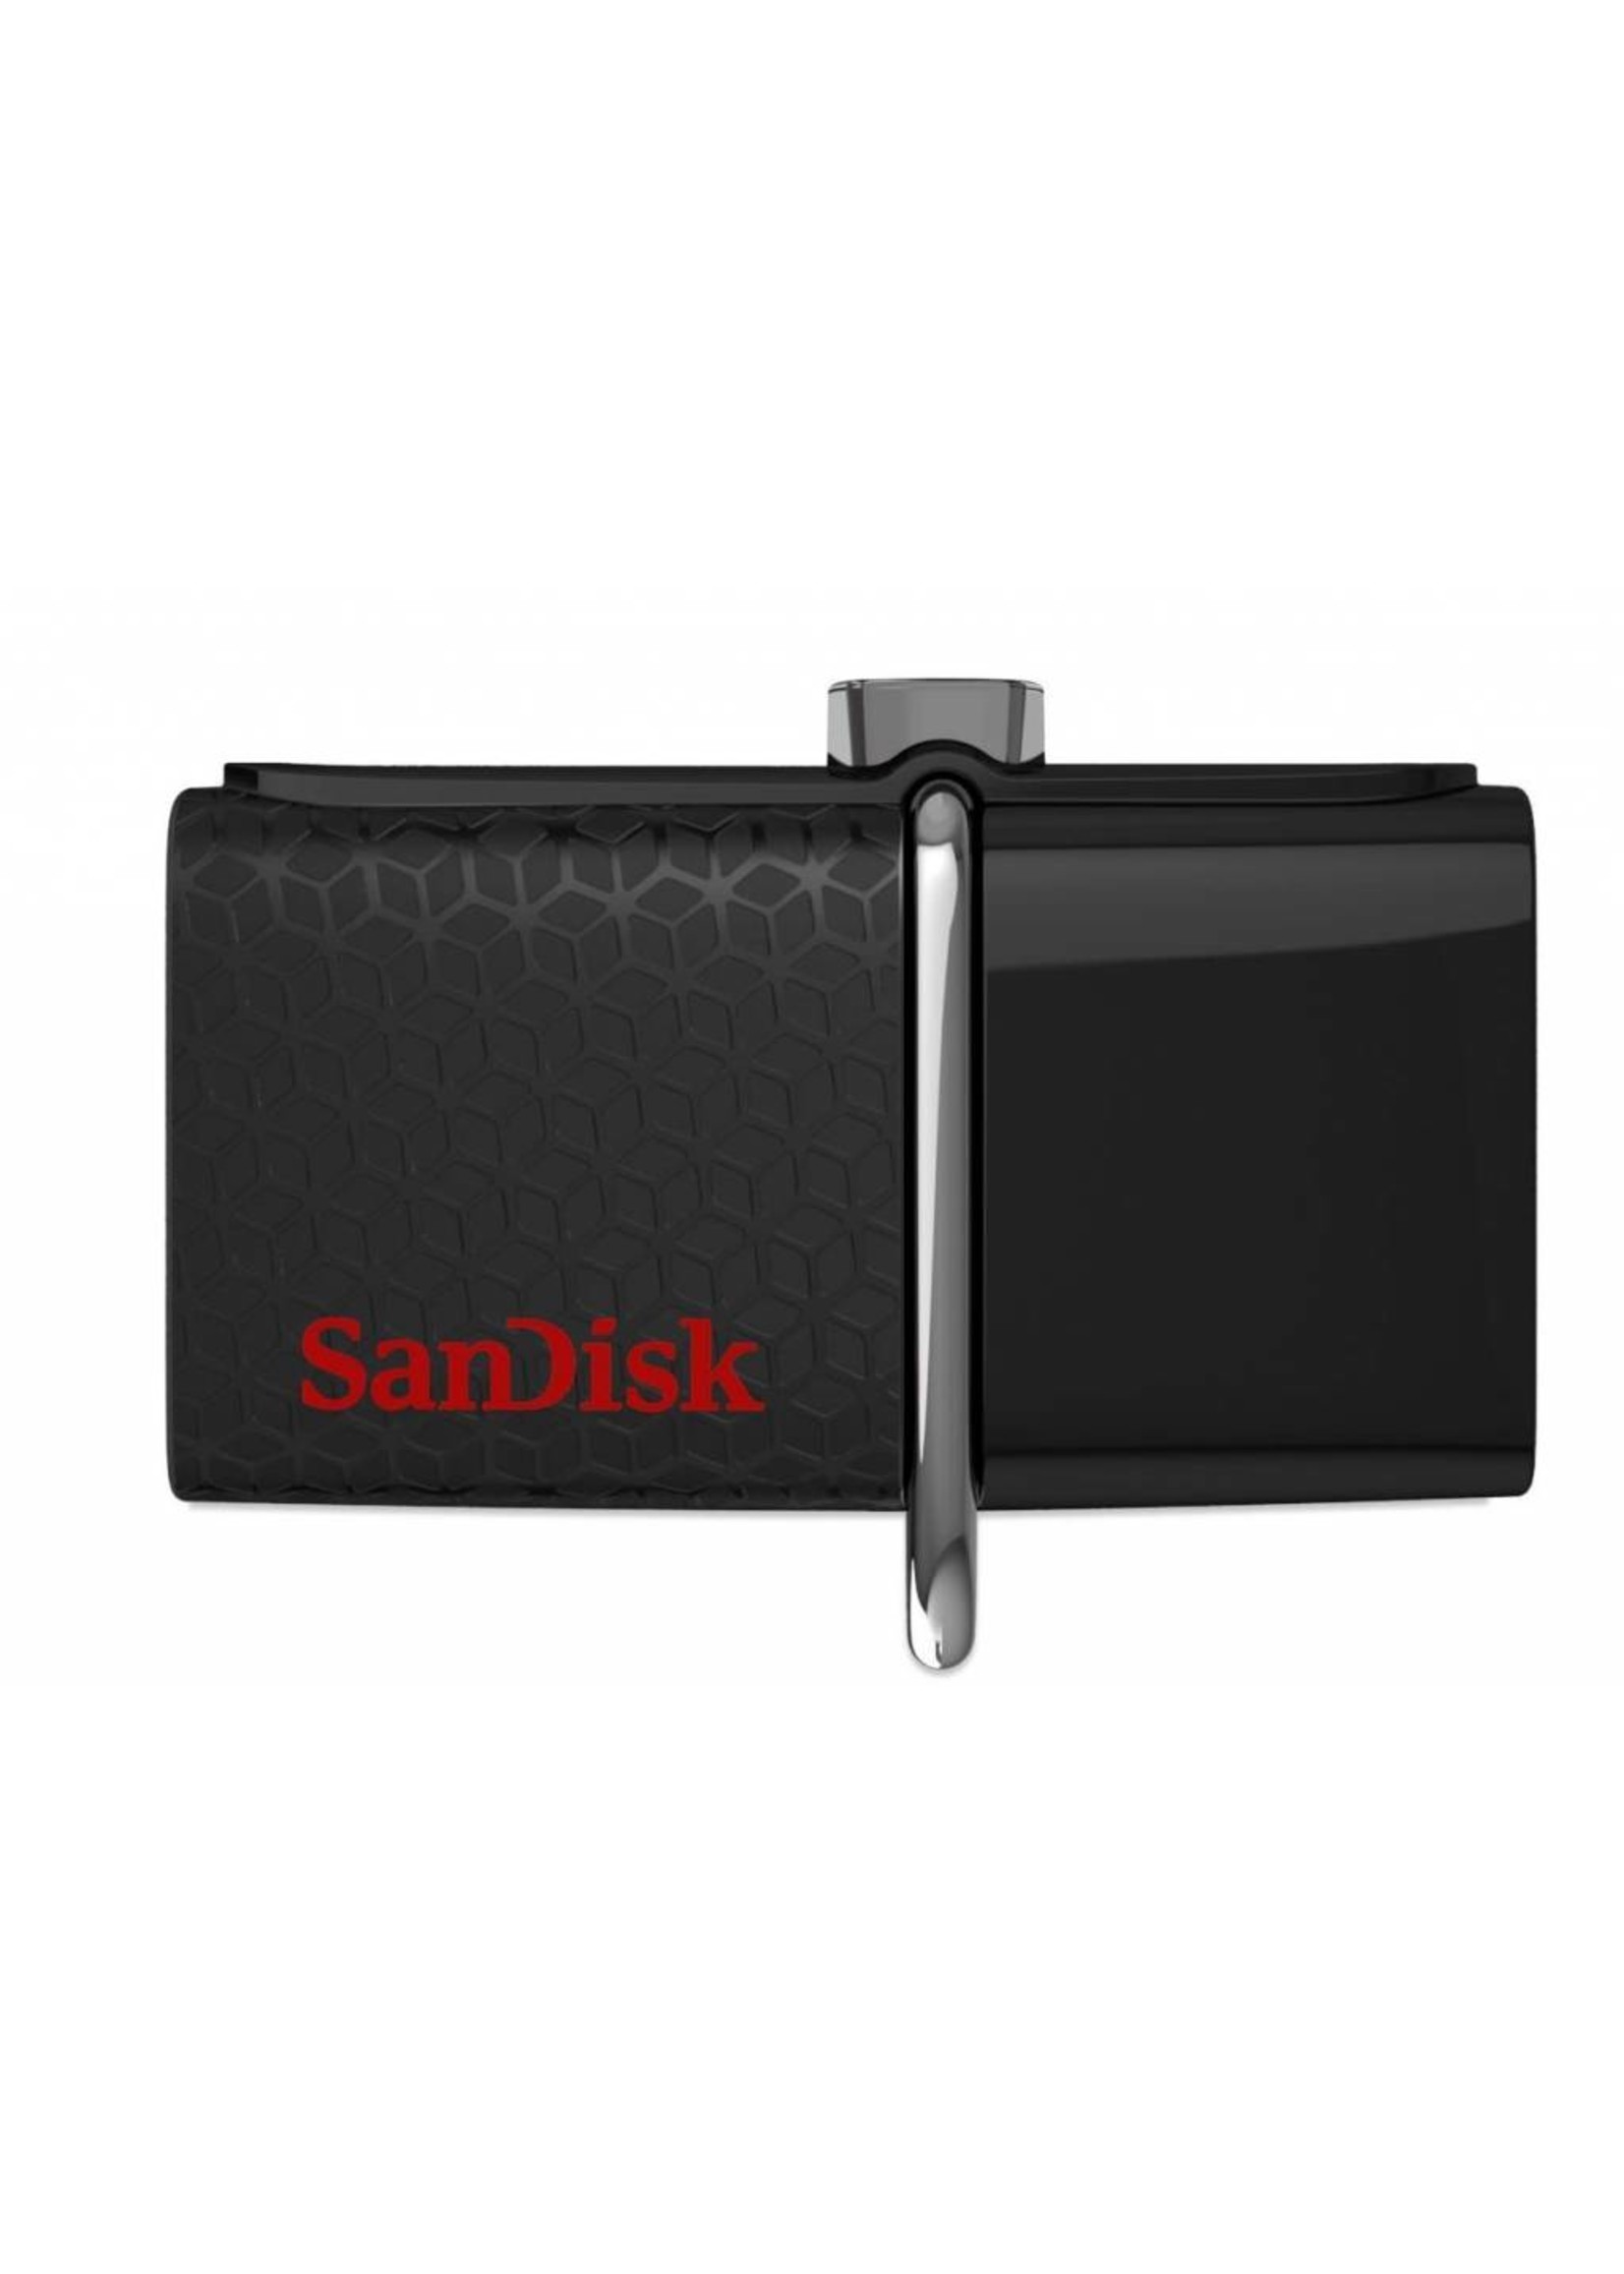 Sandisk 32GB 3.0 USB Drive